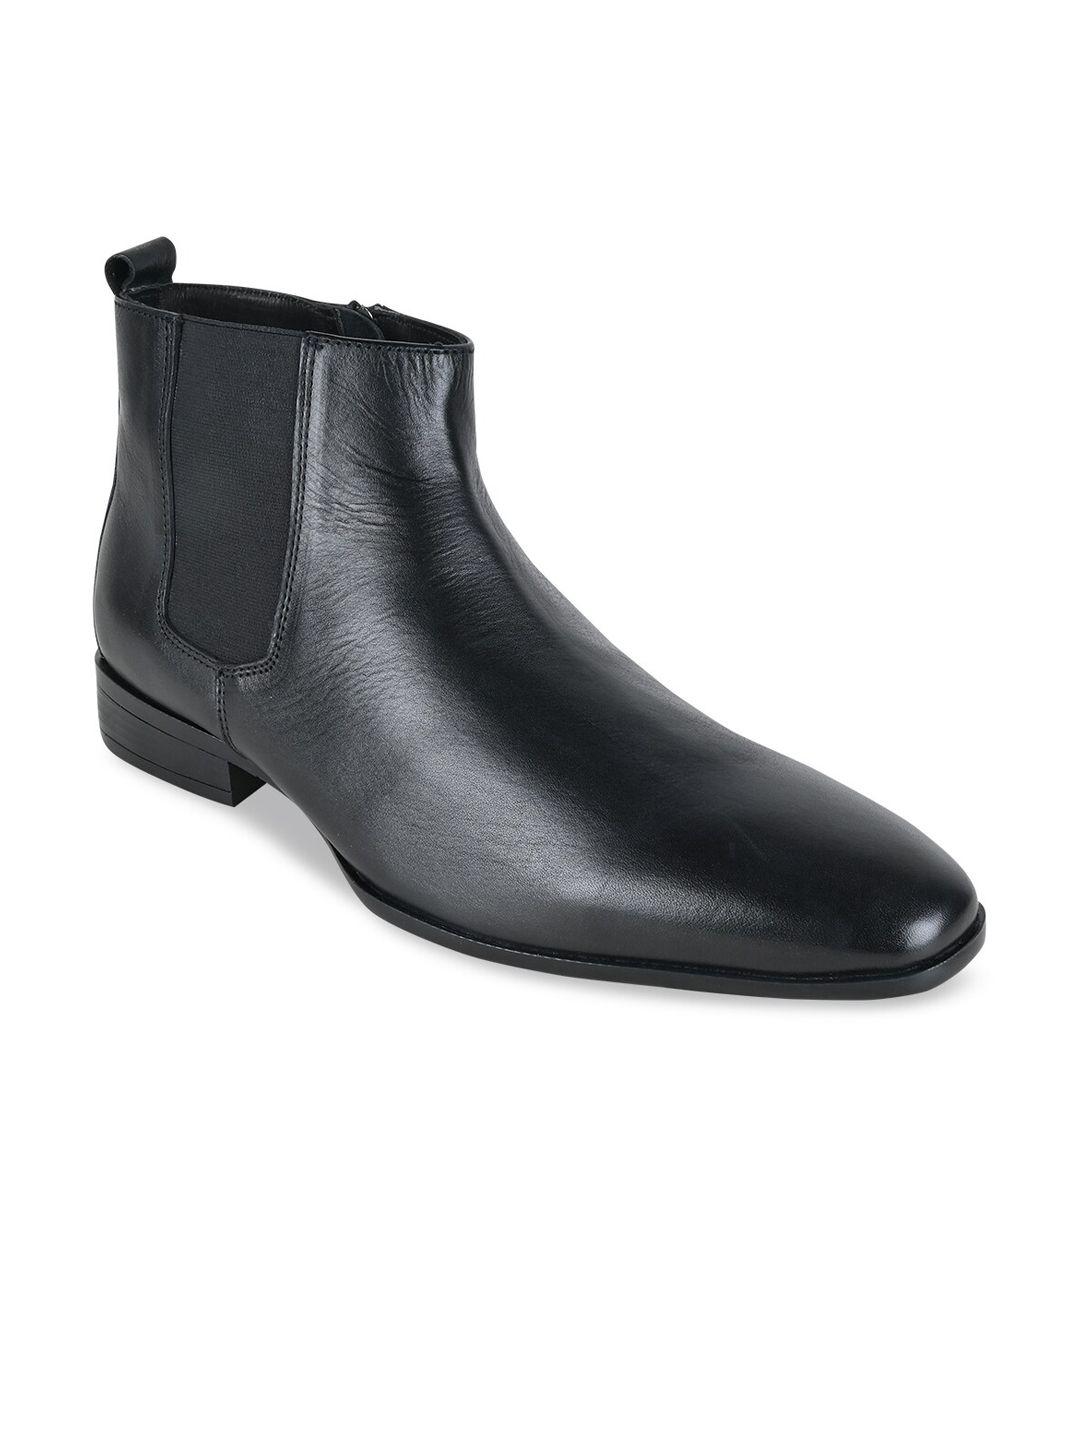 regal-men-leather-mid-top-chelsea-boots